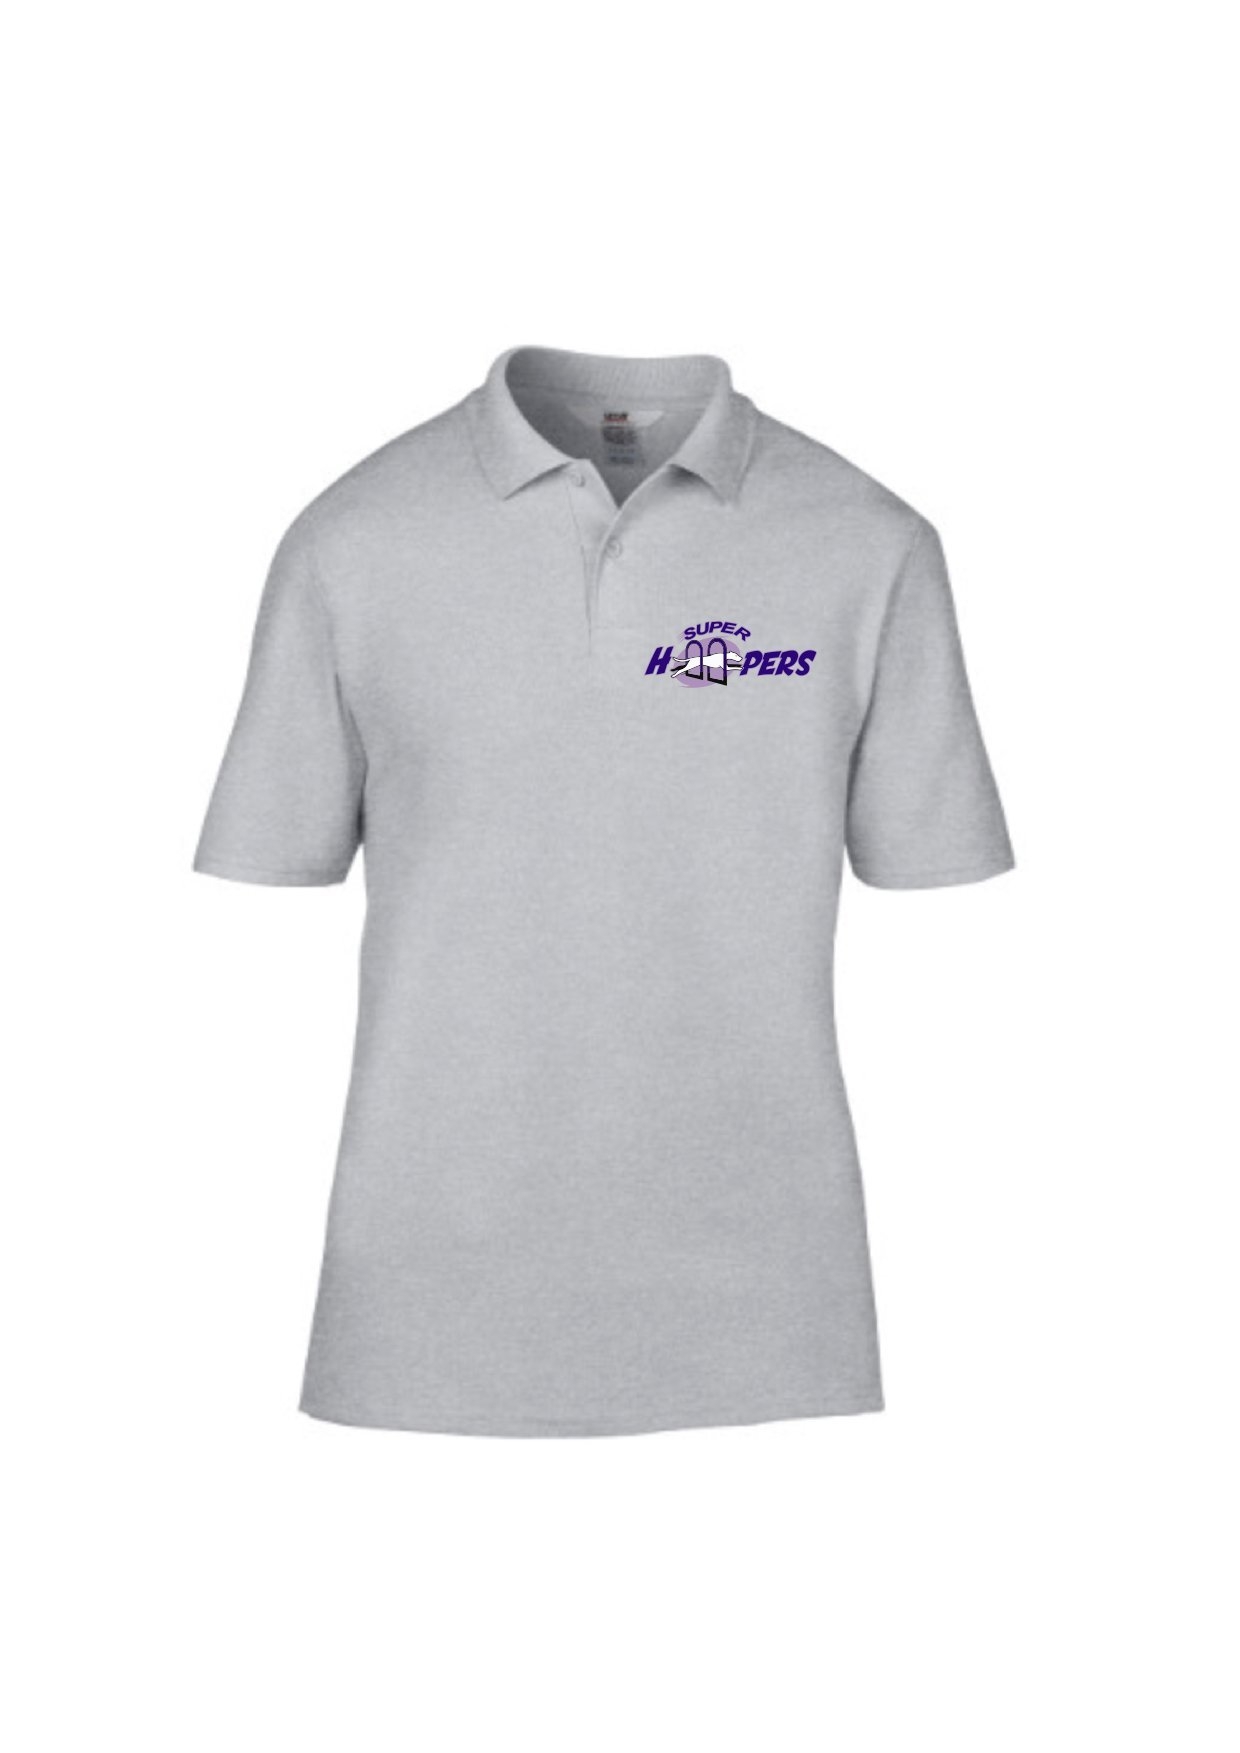 Super Hoopers Polo shirt XL – Grey – Pooch